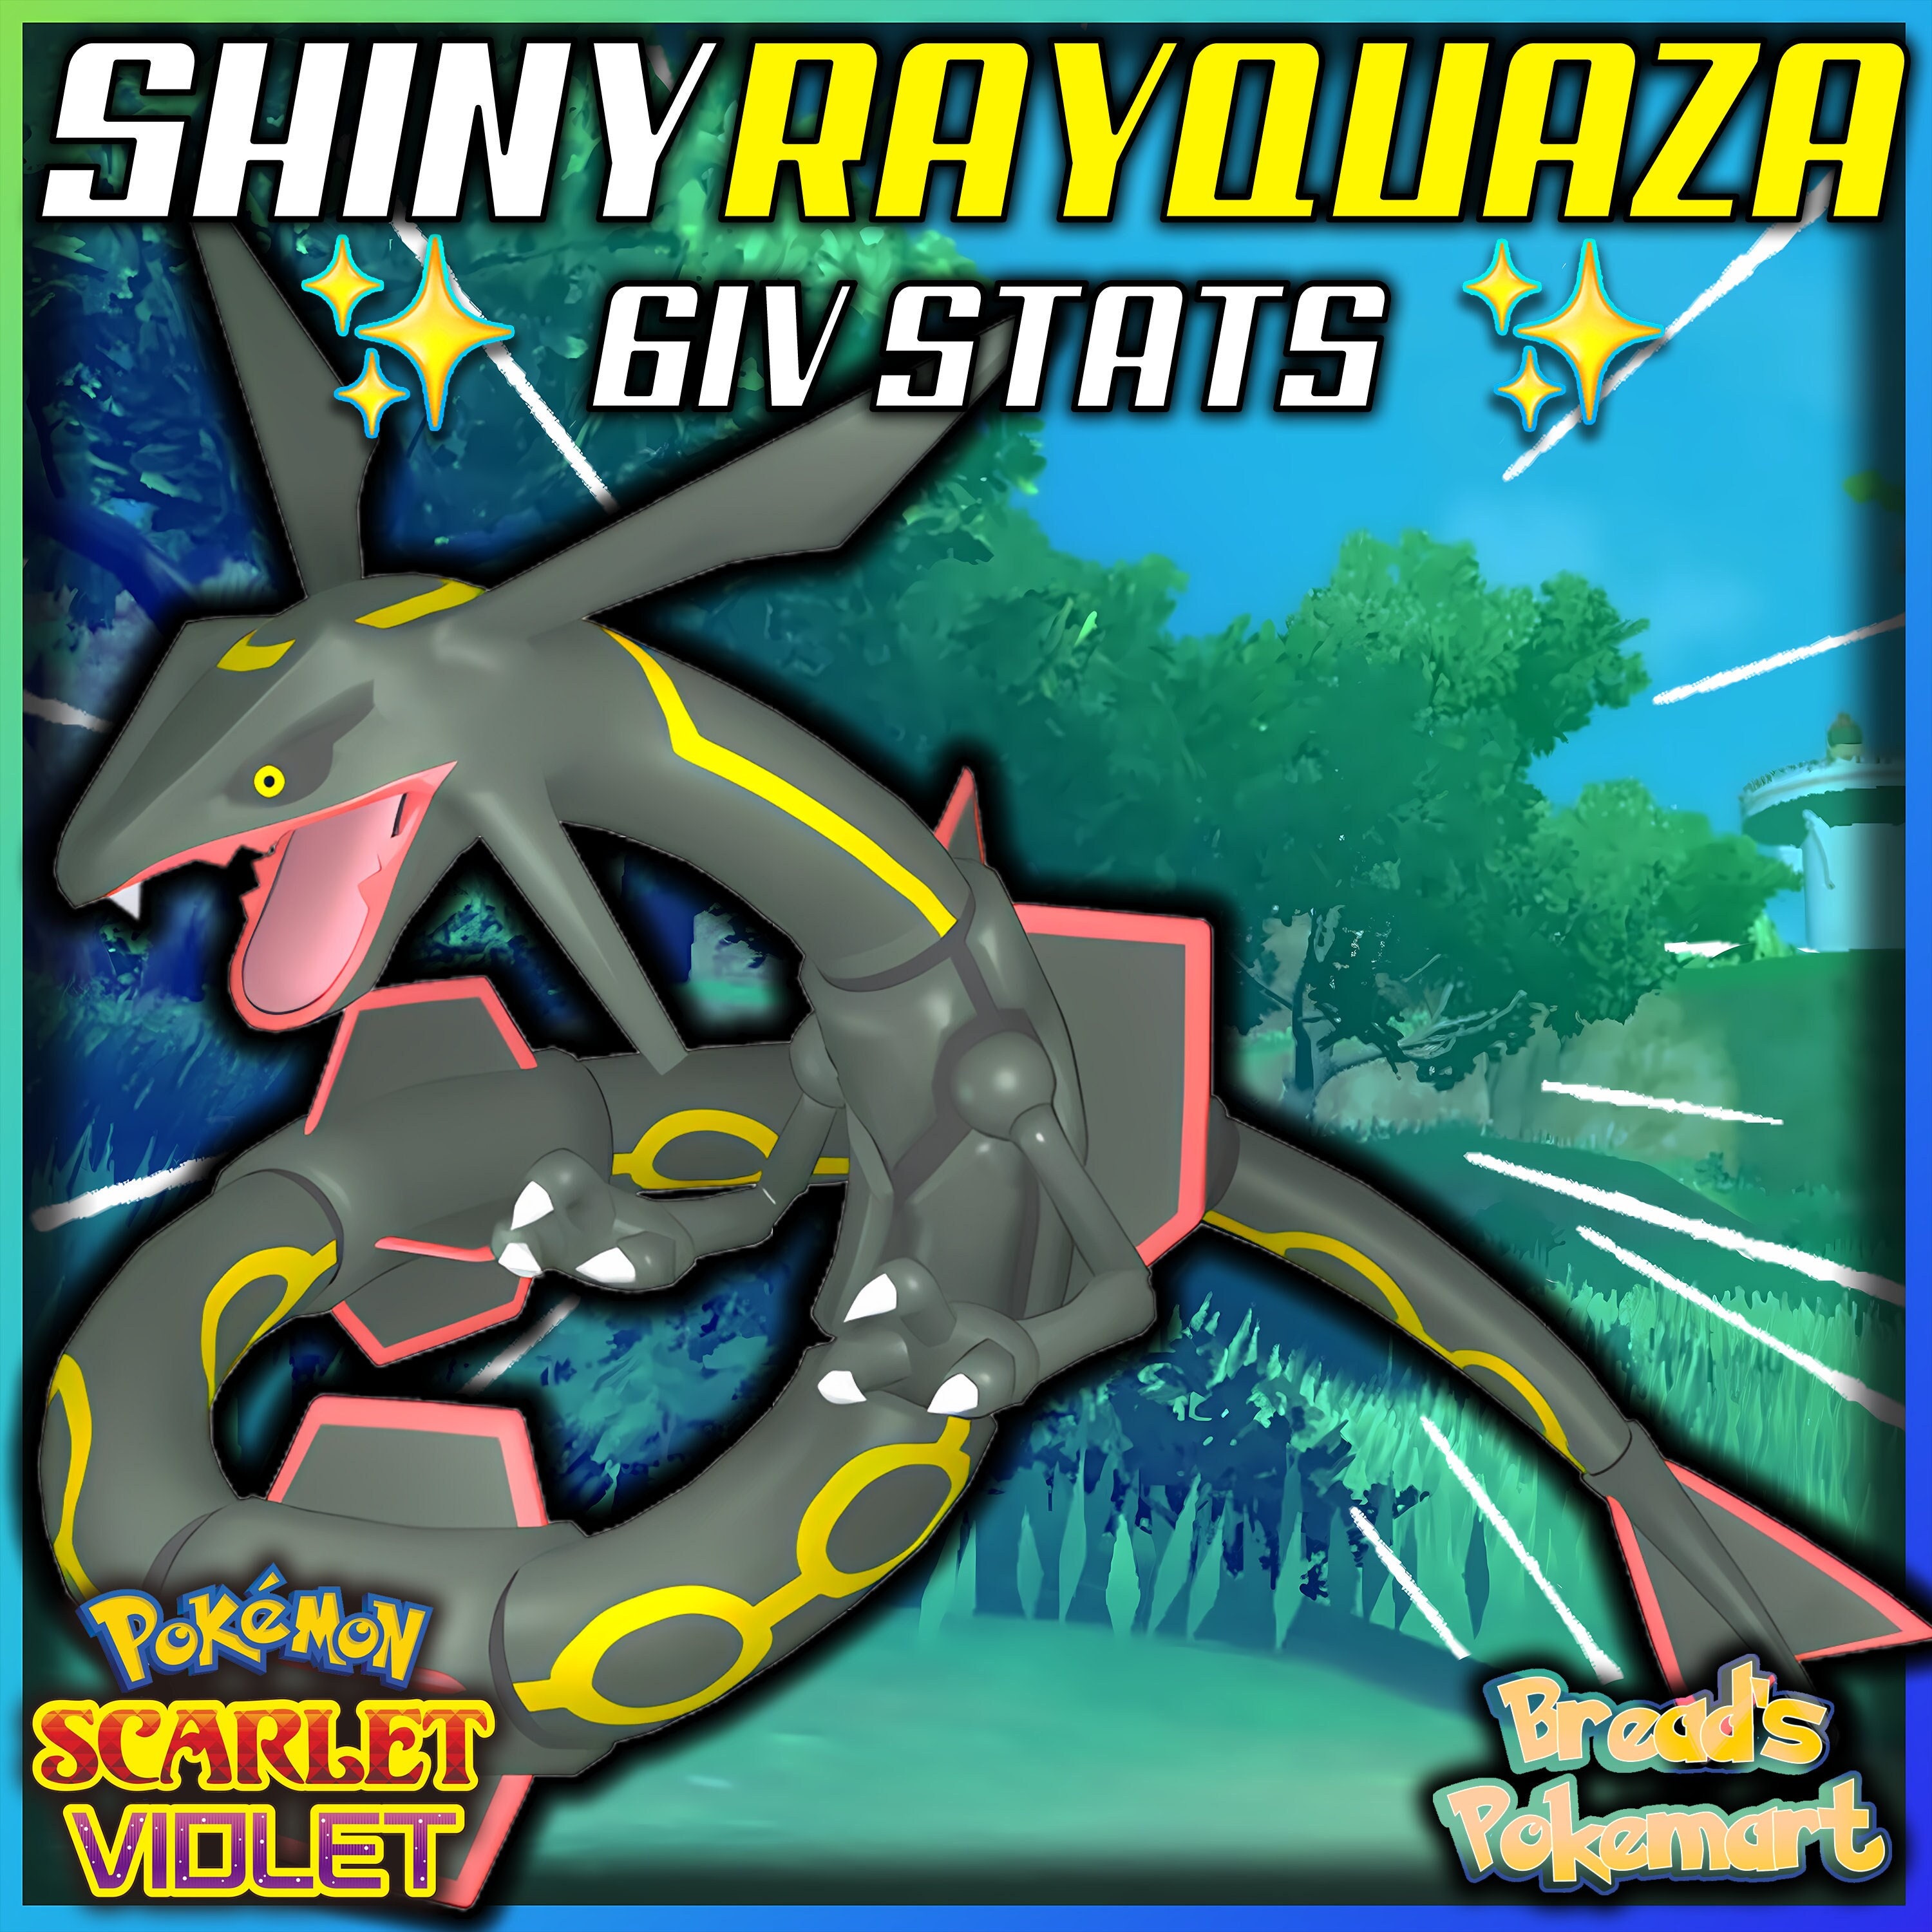 Shining Rayquaza Gold Holo Wotc Style Pokemon Art Card 